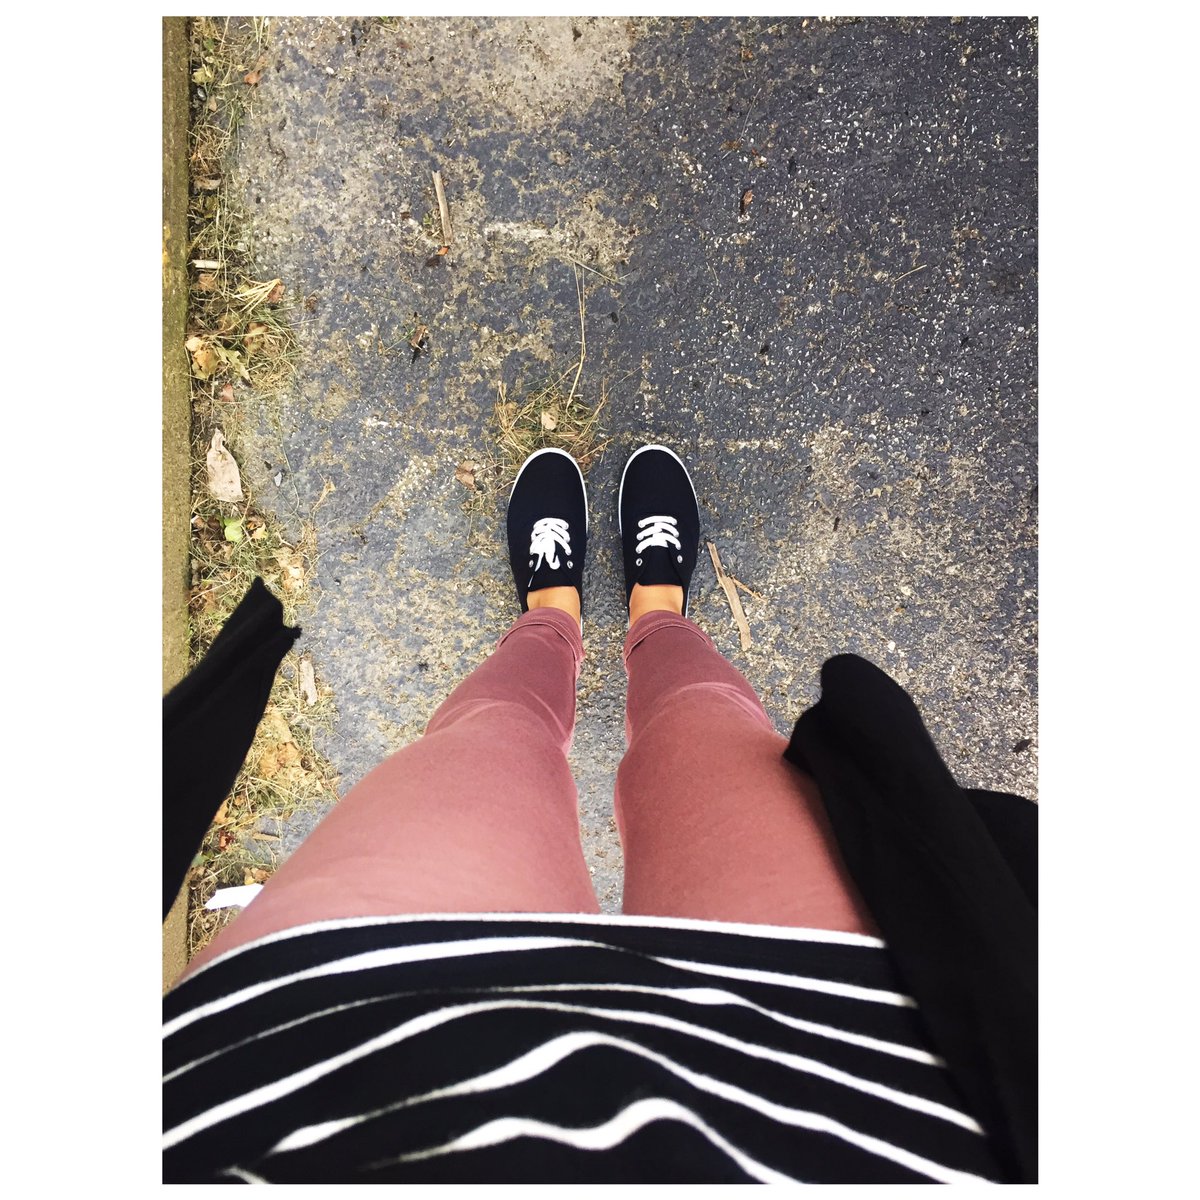 Stripes, pink pants, and $6 kicks 🌻
@CharlotteRusse @marshalls @MyGabes #bloggers #fashion #style #followforfashion #youngstown #ohio